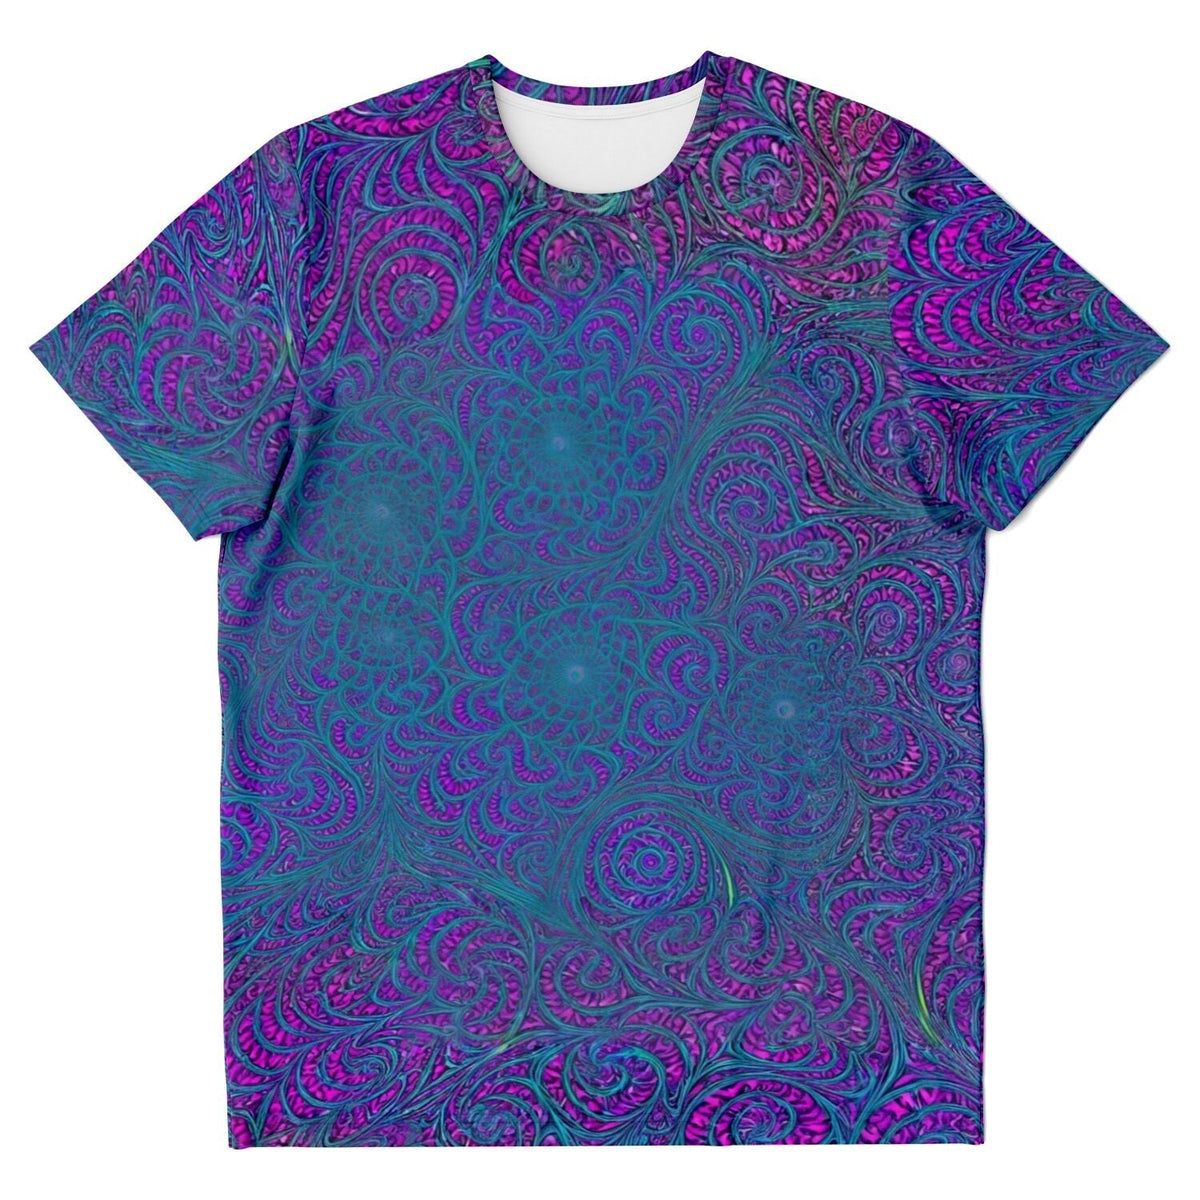 T-shirt XS Vibrational Alignment: Sacred Geometry Fractal Trippy Tee | Cosmic Empowerment | Flower of Life Abstract Mandala Graphic Art T-Shirt